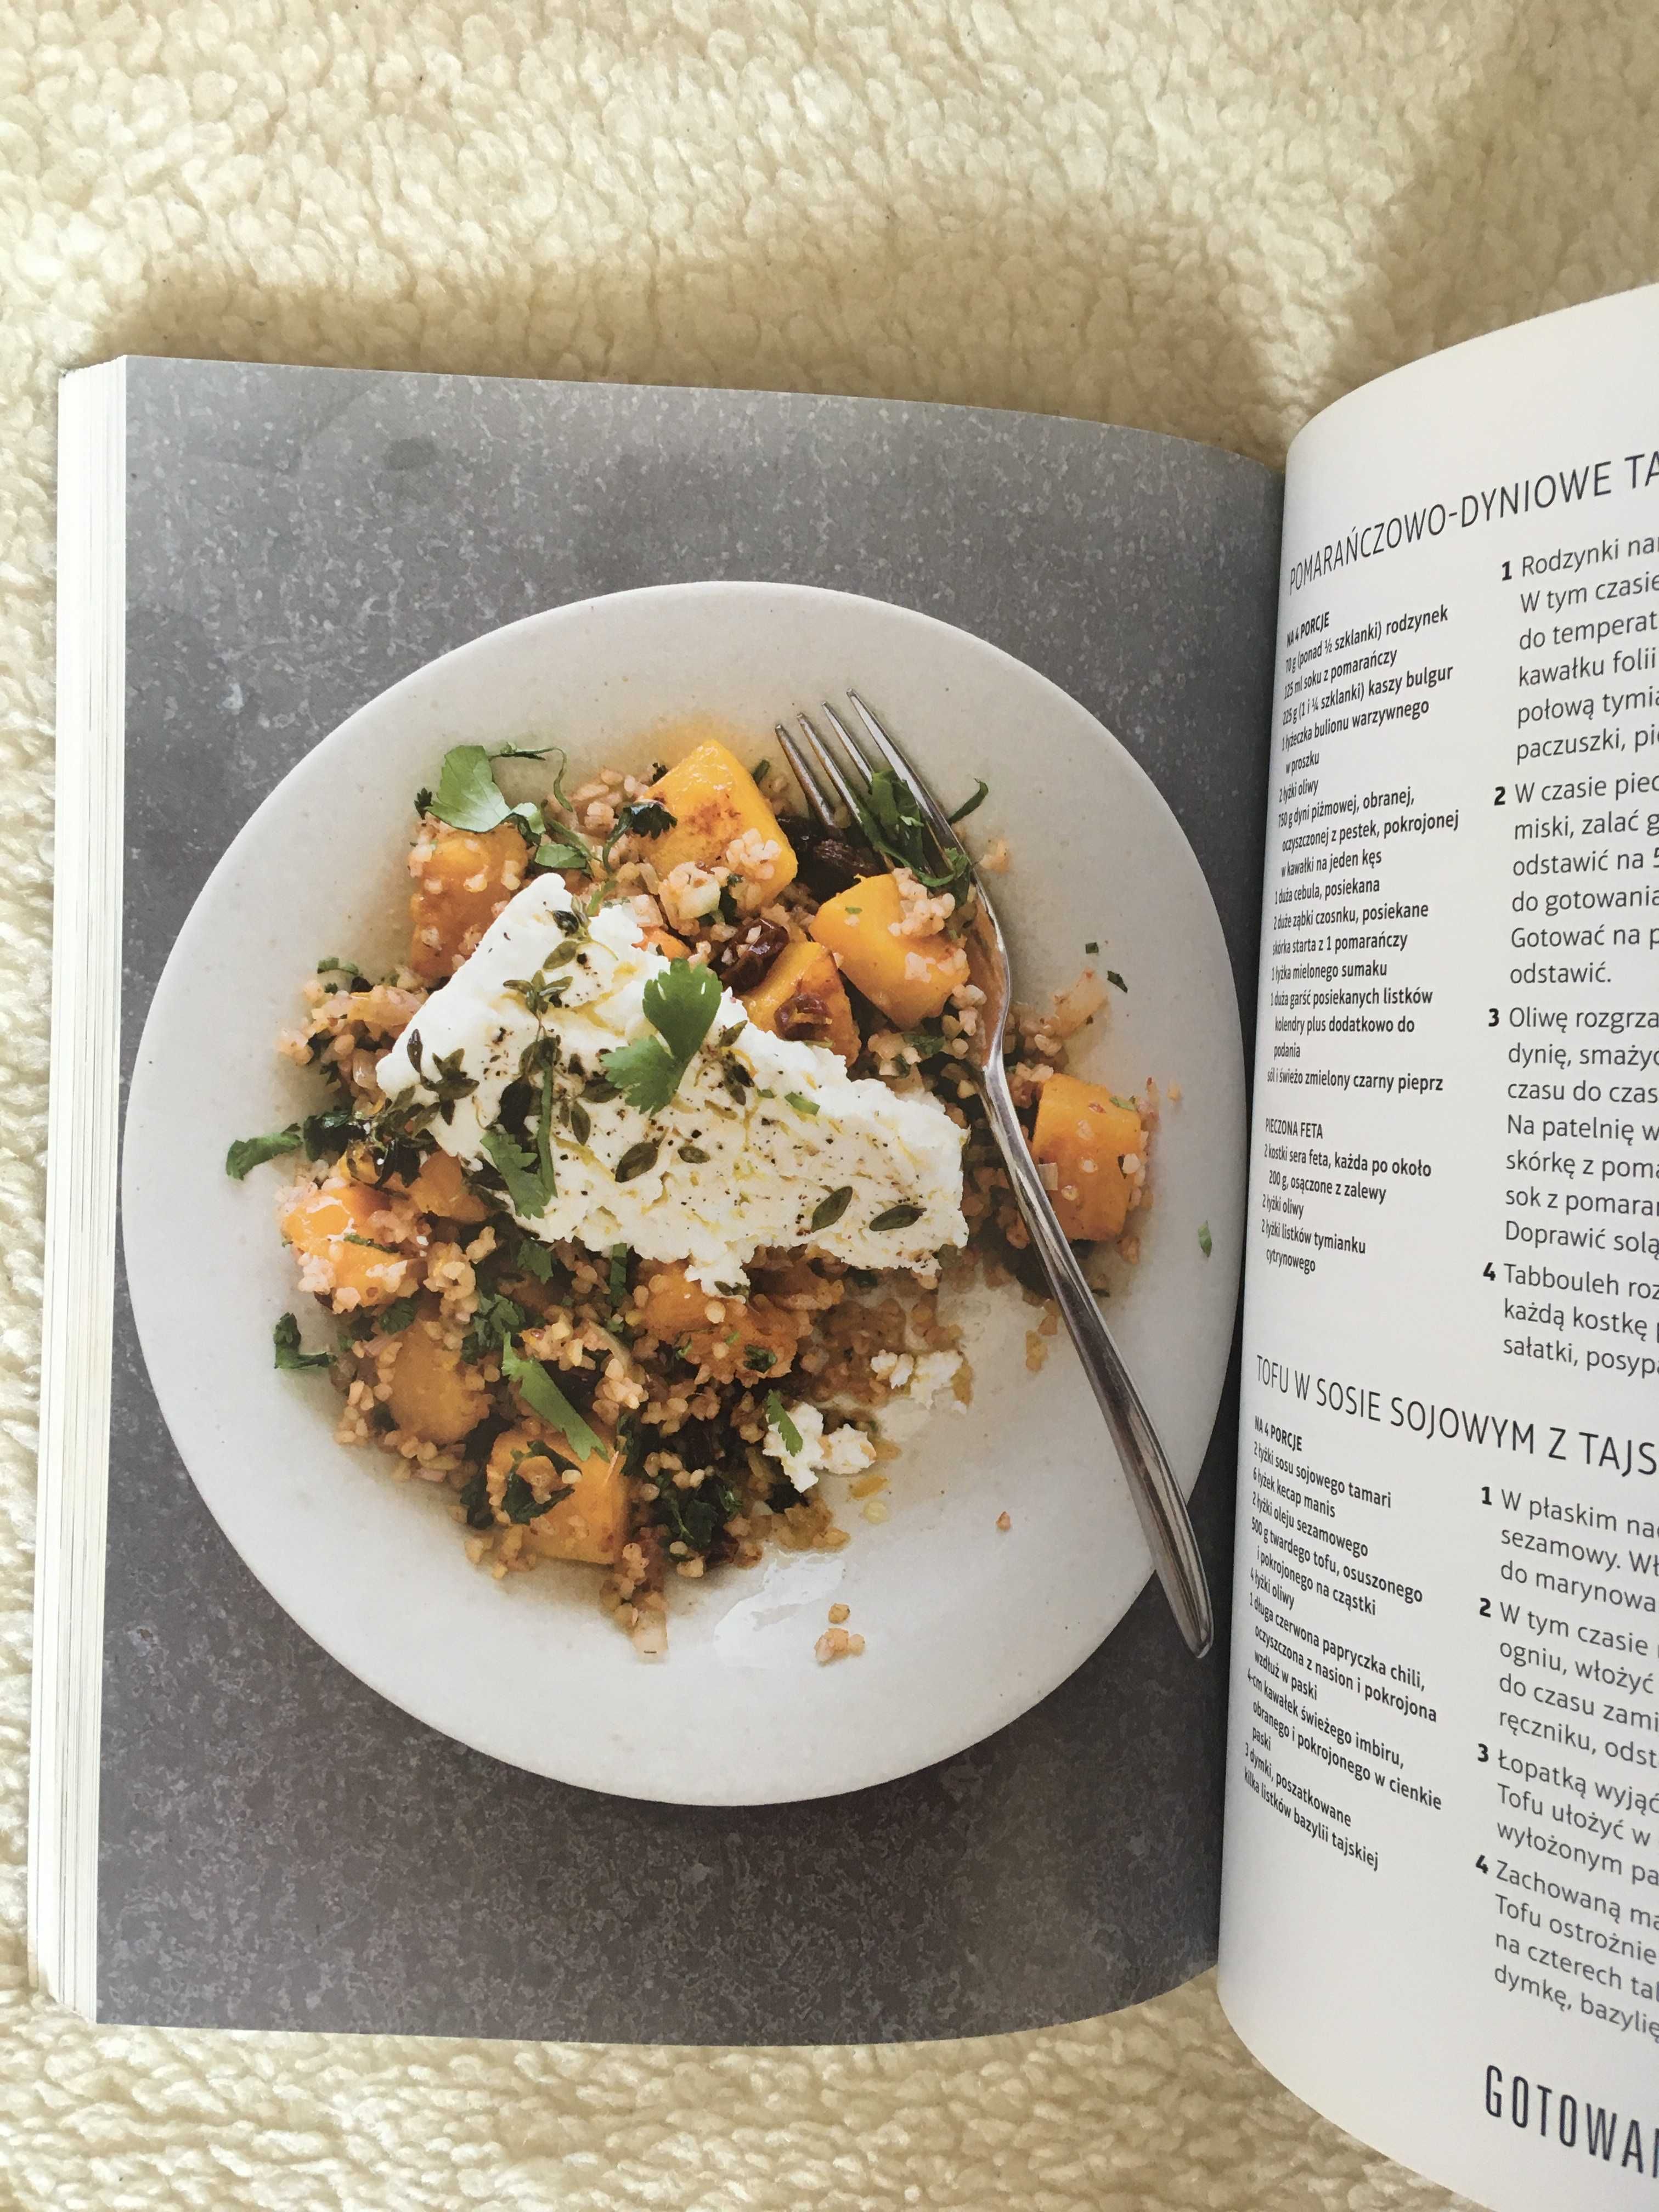 Książka: Kuchnia wegetariańska, N. Graimes, stan bardzo dobry.